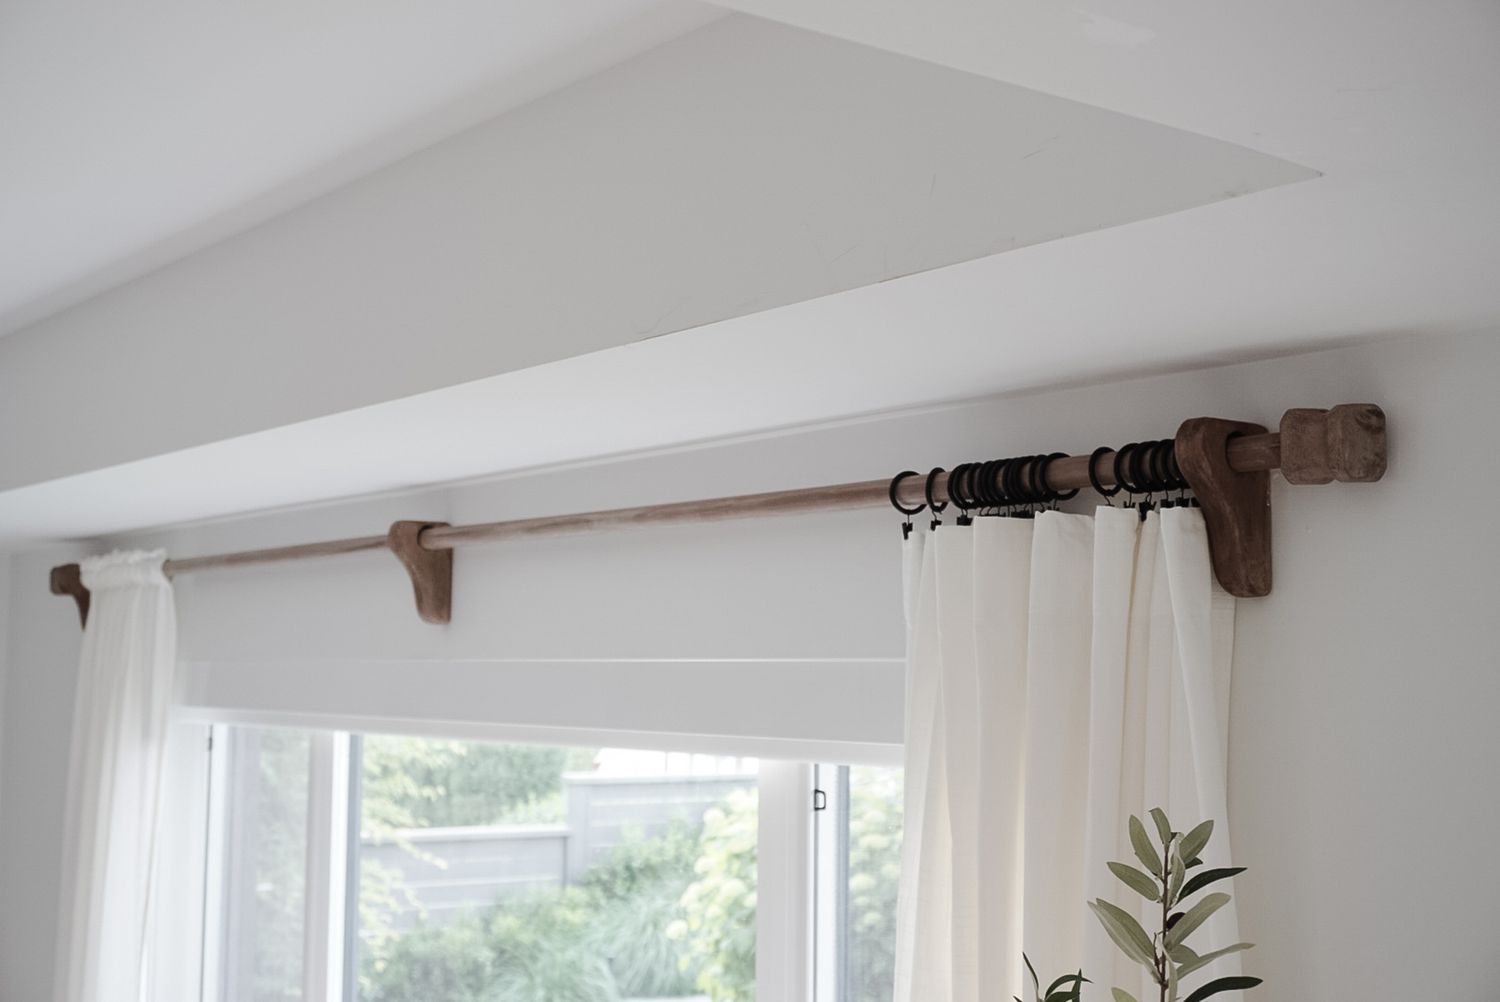 A rustic DIY curtain rod